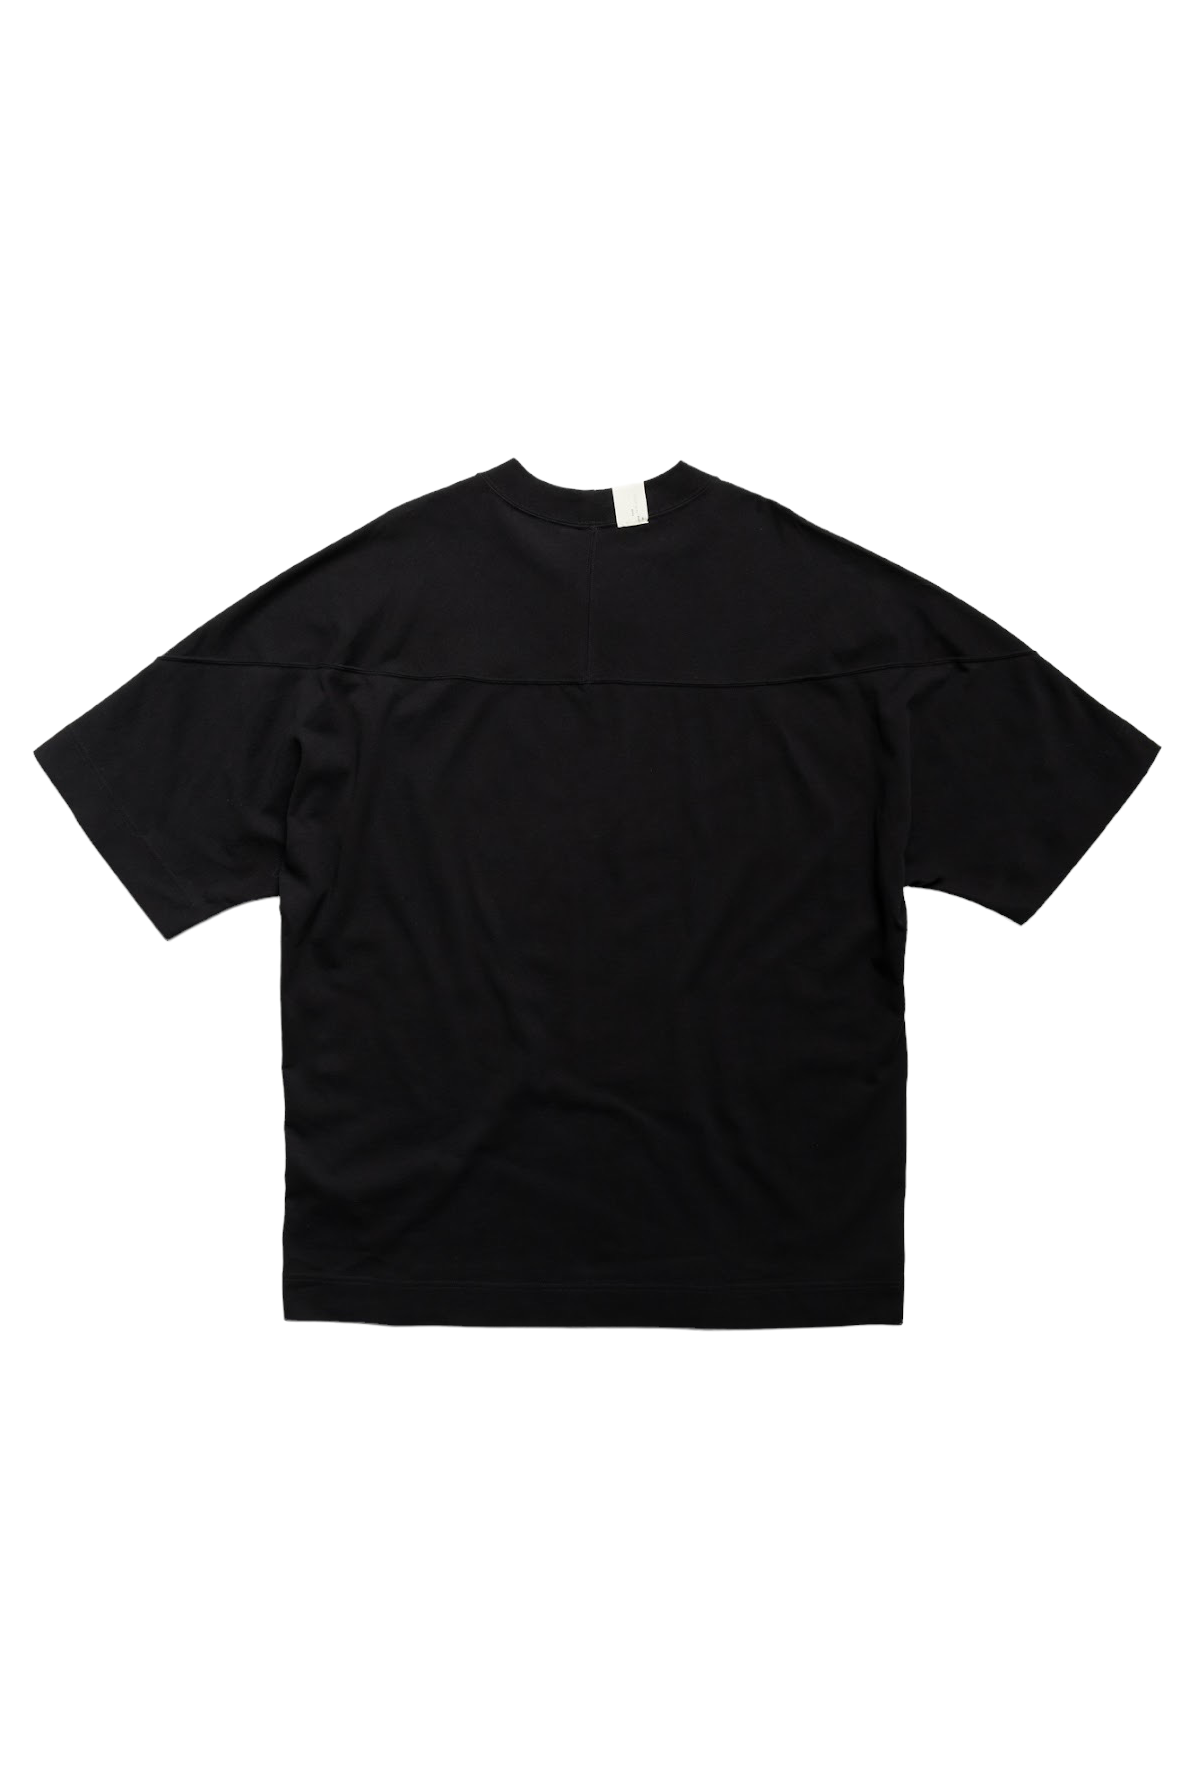 N. HOOLYWOOD x Champion Crewneck T-Shirt - Black